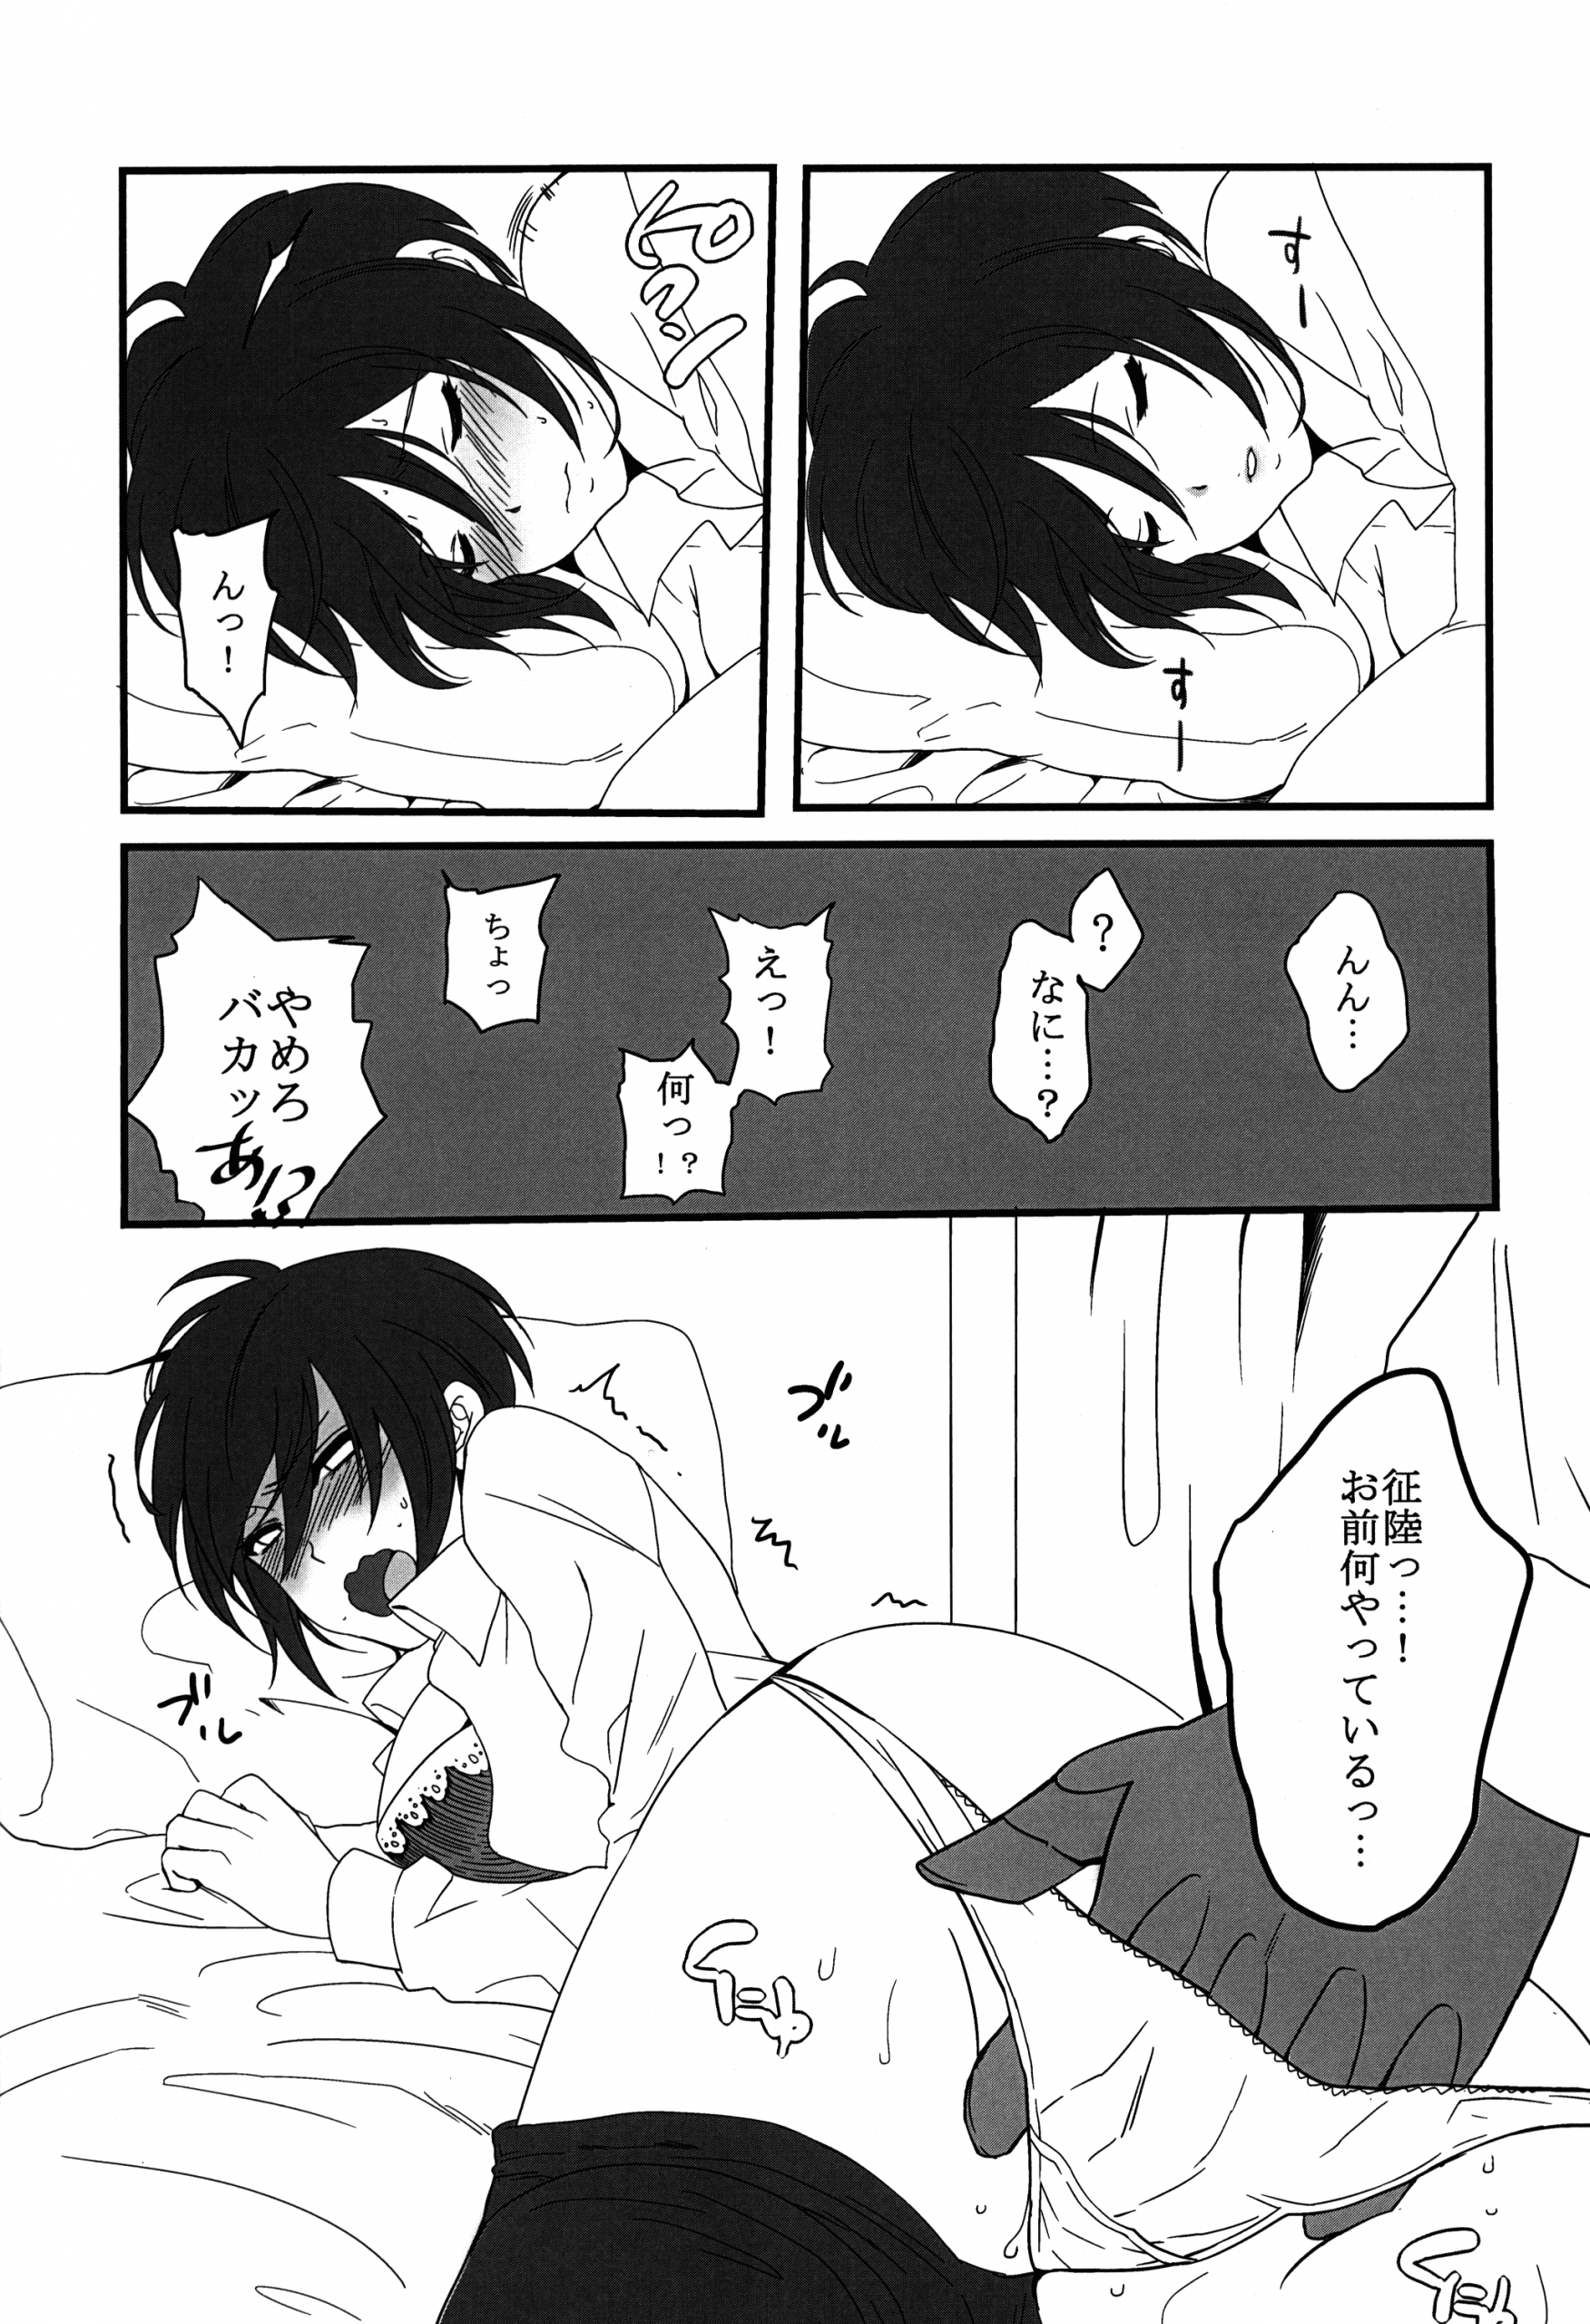 lewd dream hentai manga picture 5